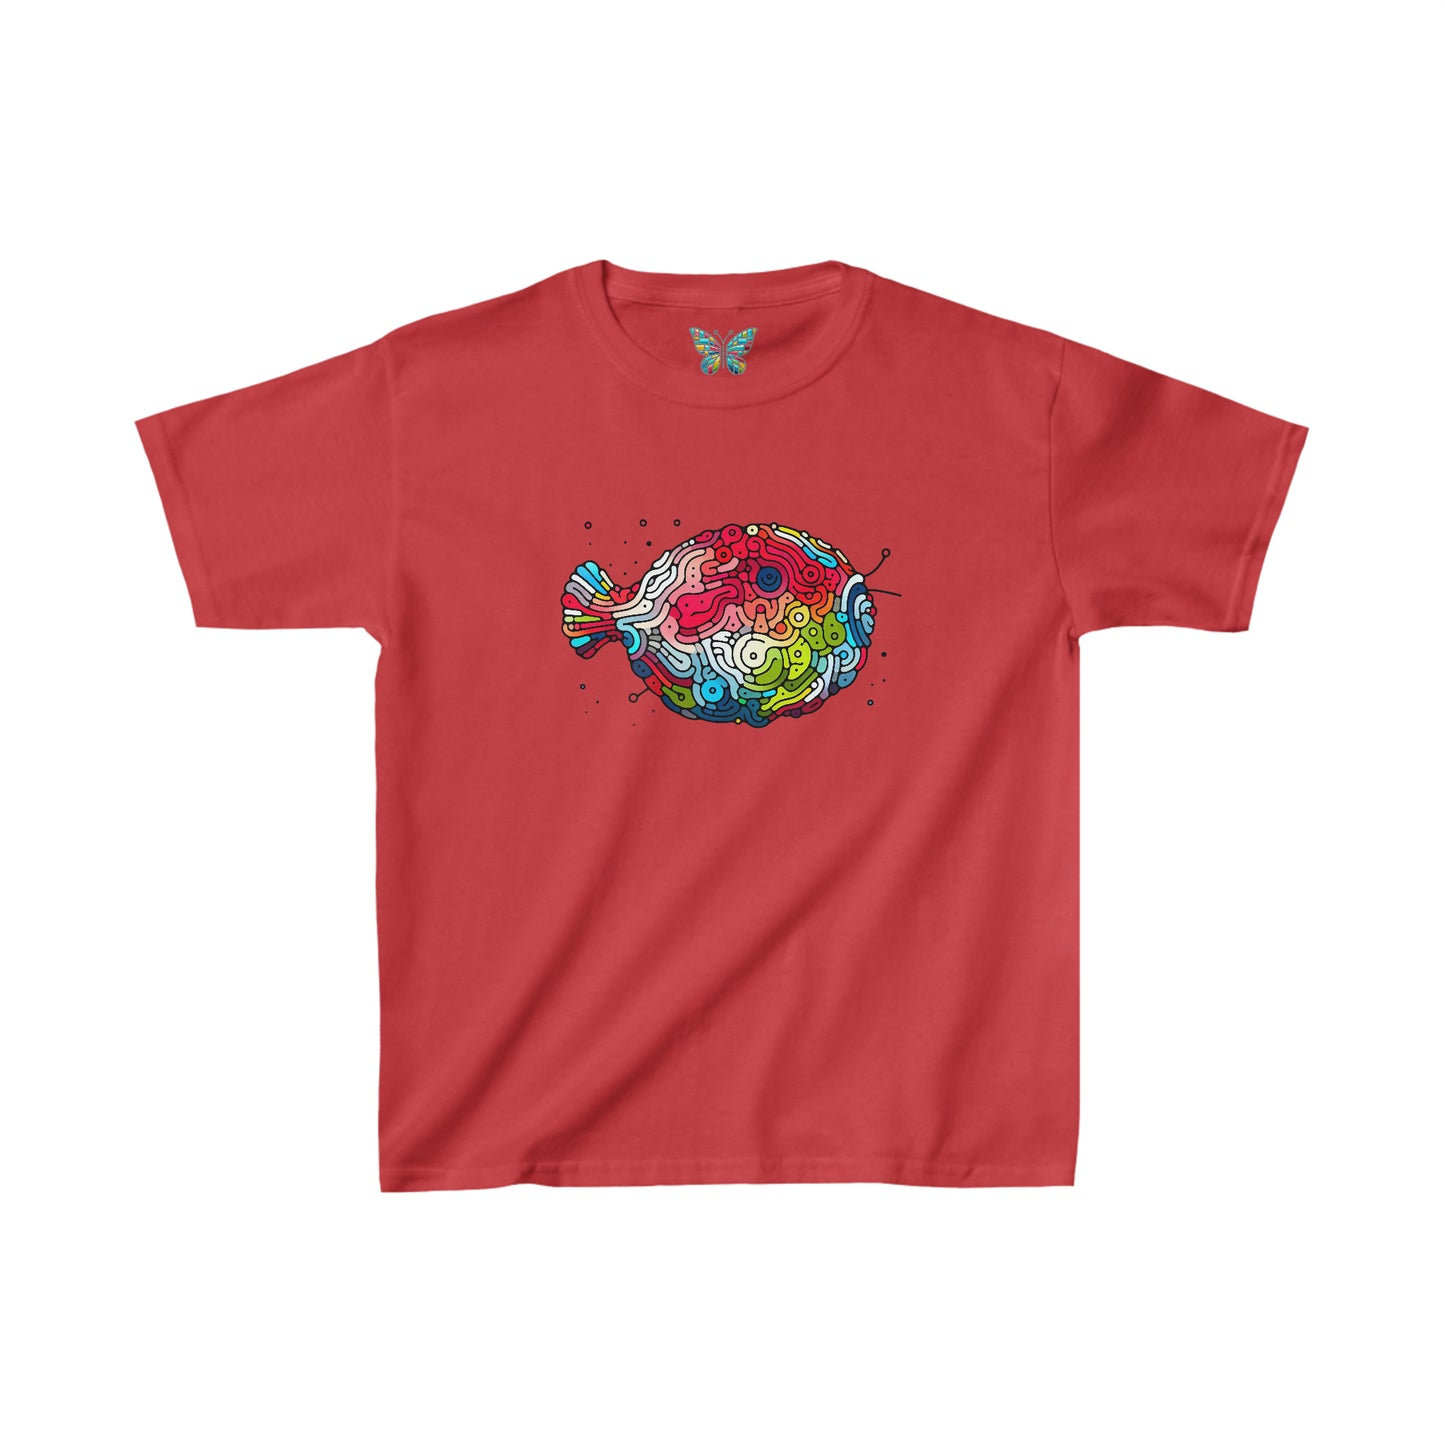 Blobfish Fantasmoria - Youth - Snazzle Tee